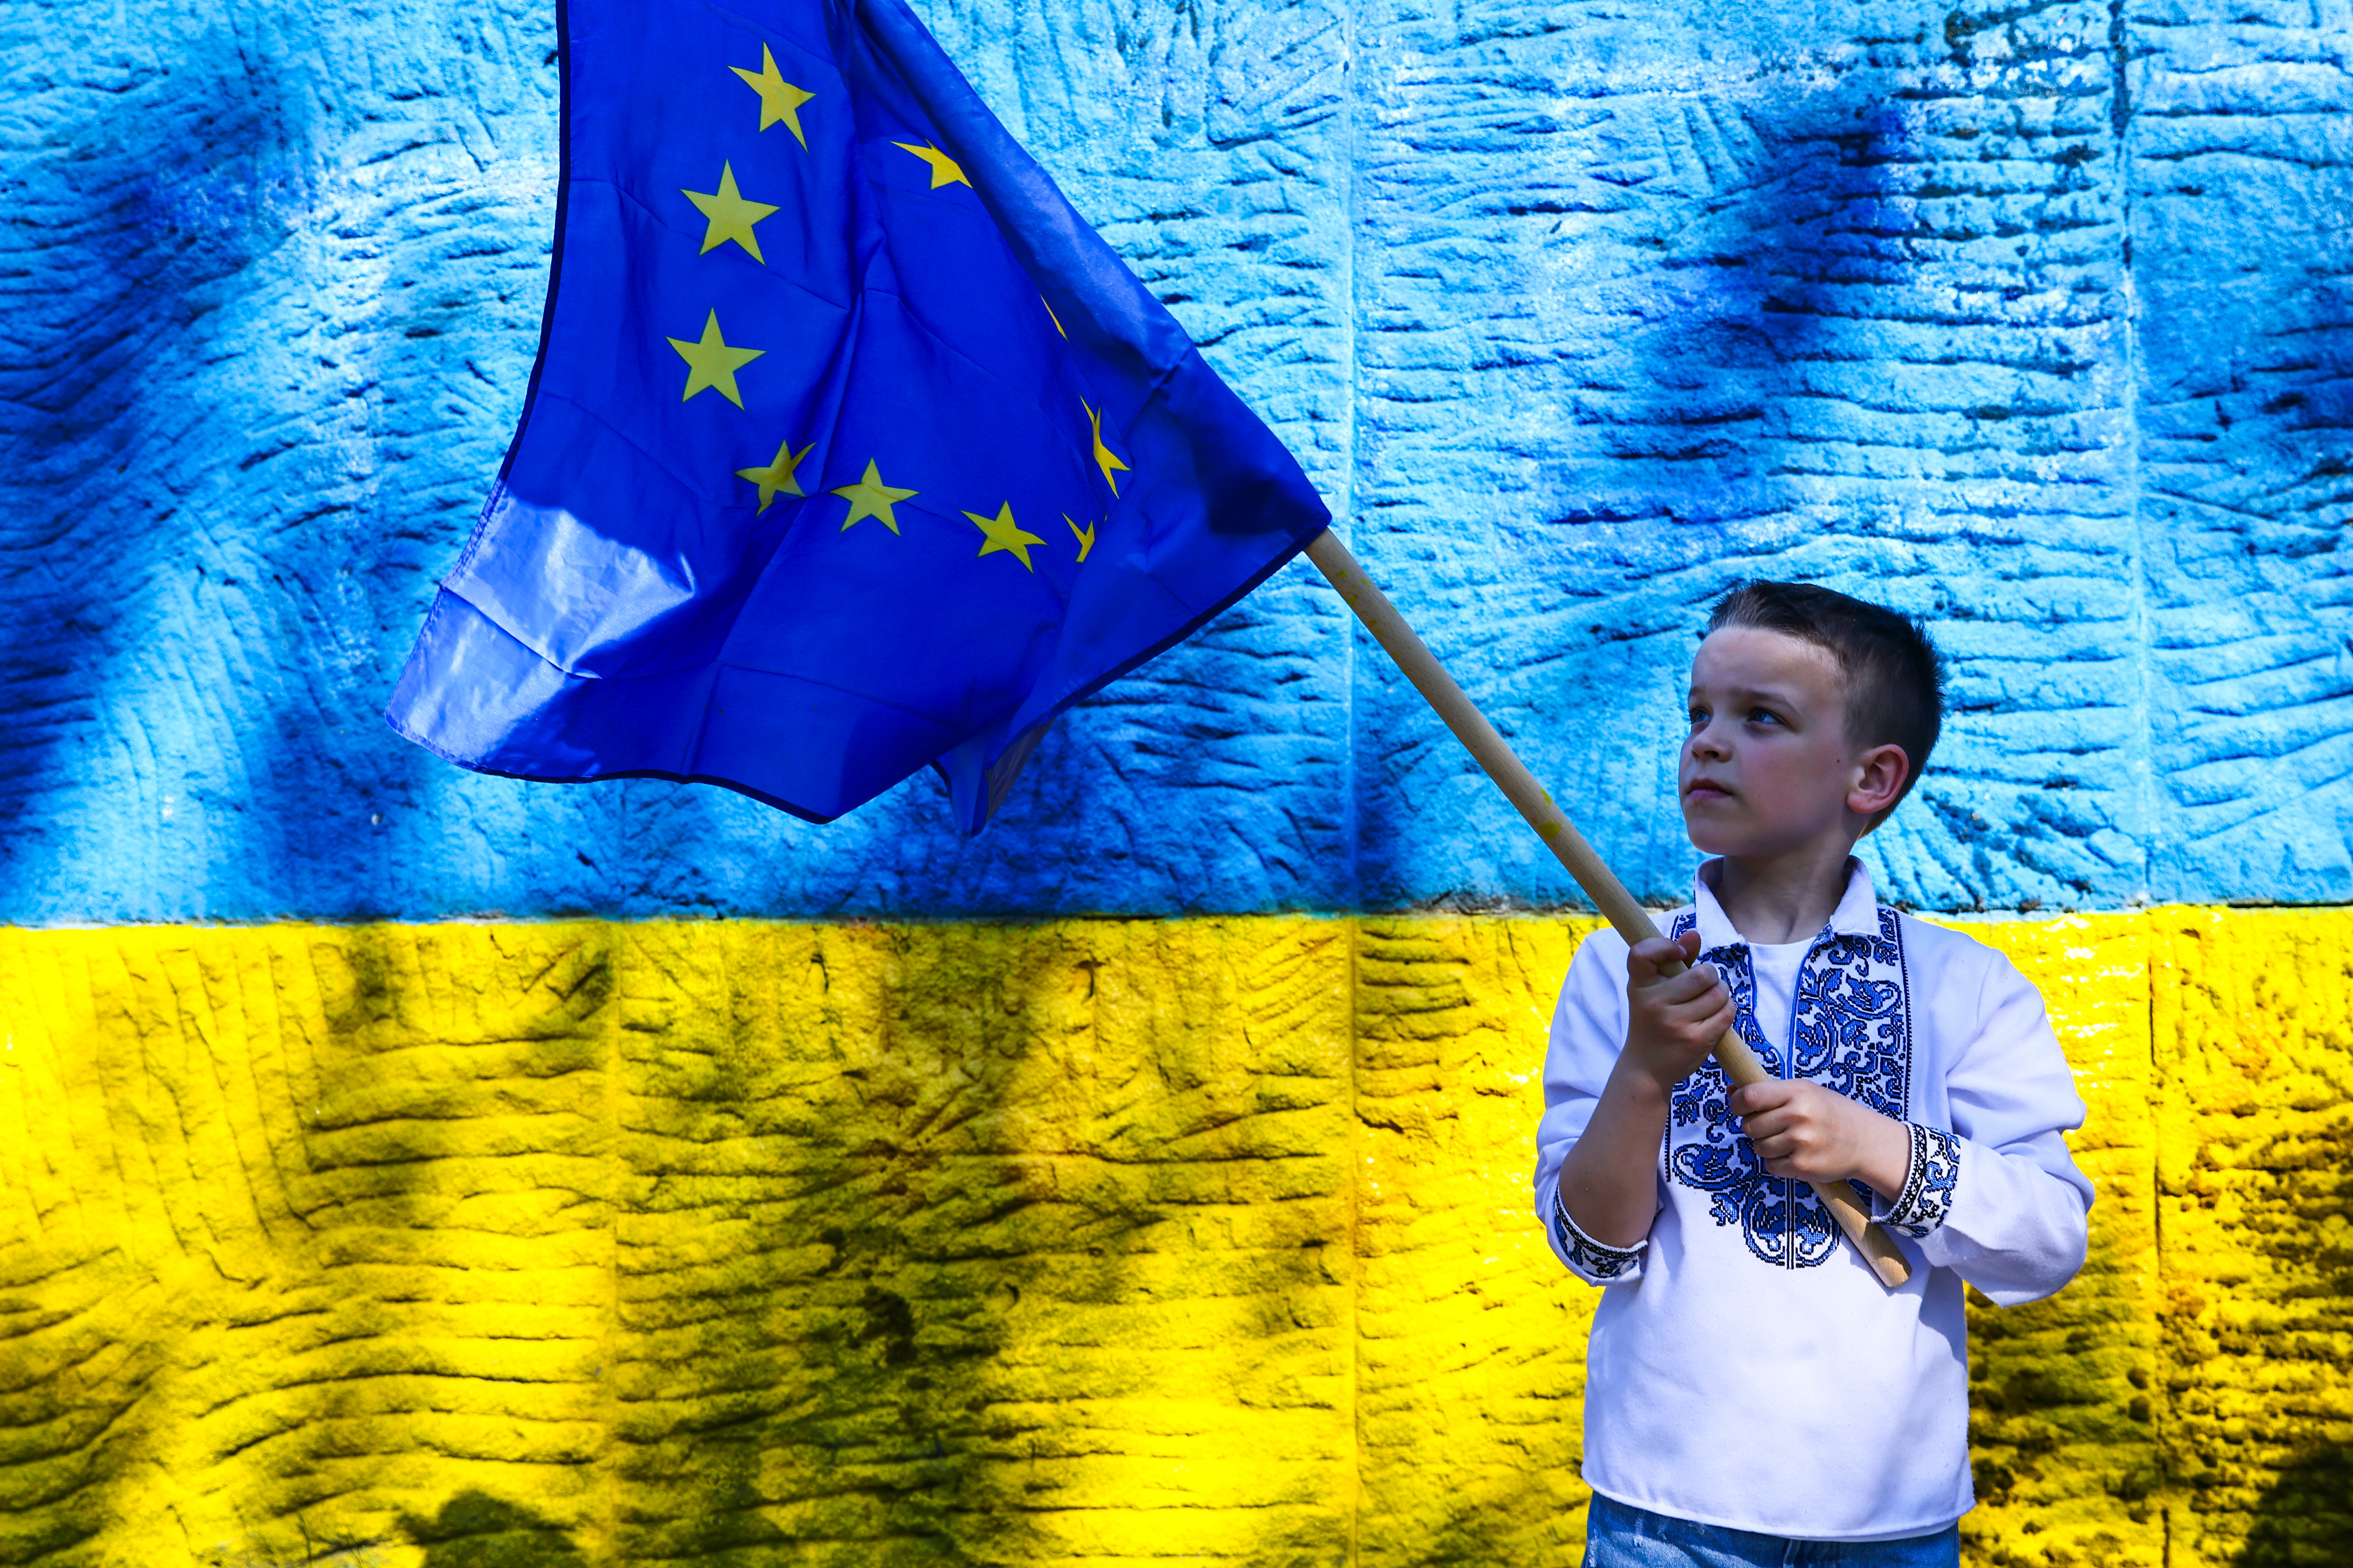 Oksana Bashuk Hepburn: New thinking needed in the global democratic camp on Russia’s war in Ukraine